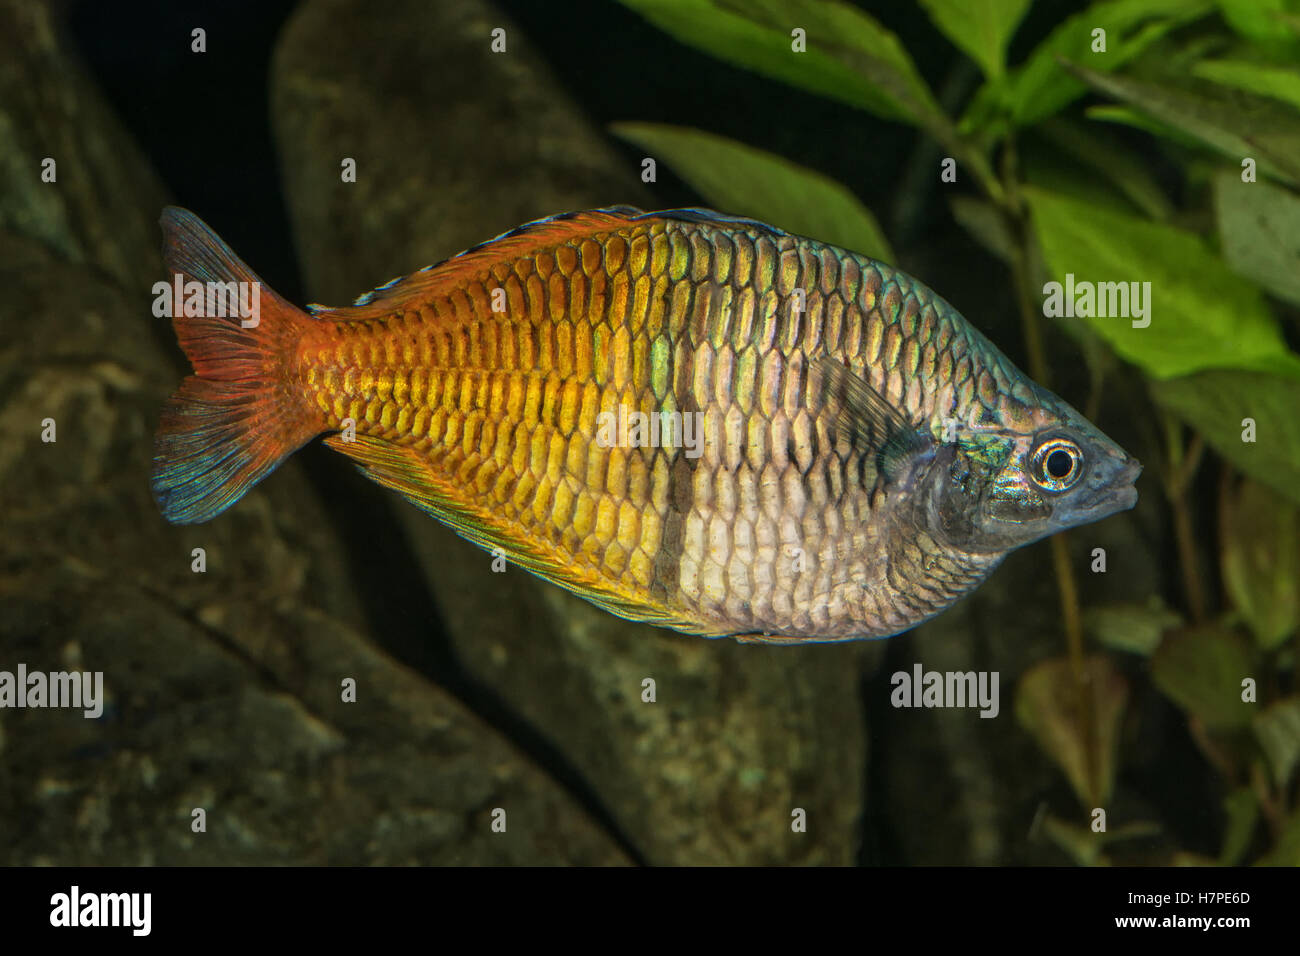 Portrait of freshwater rainbowfish (Melanotaenia boesemani) in aquarium Stock Photo